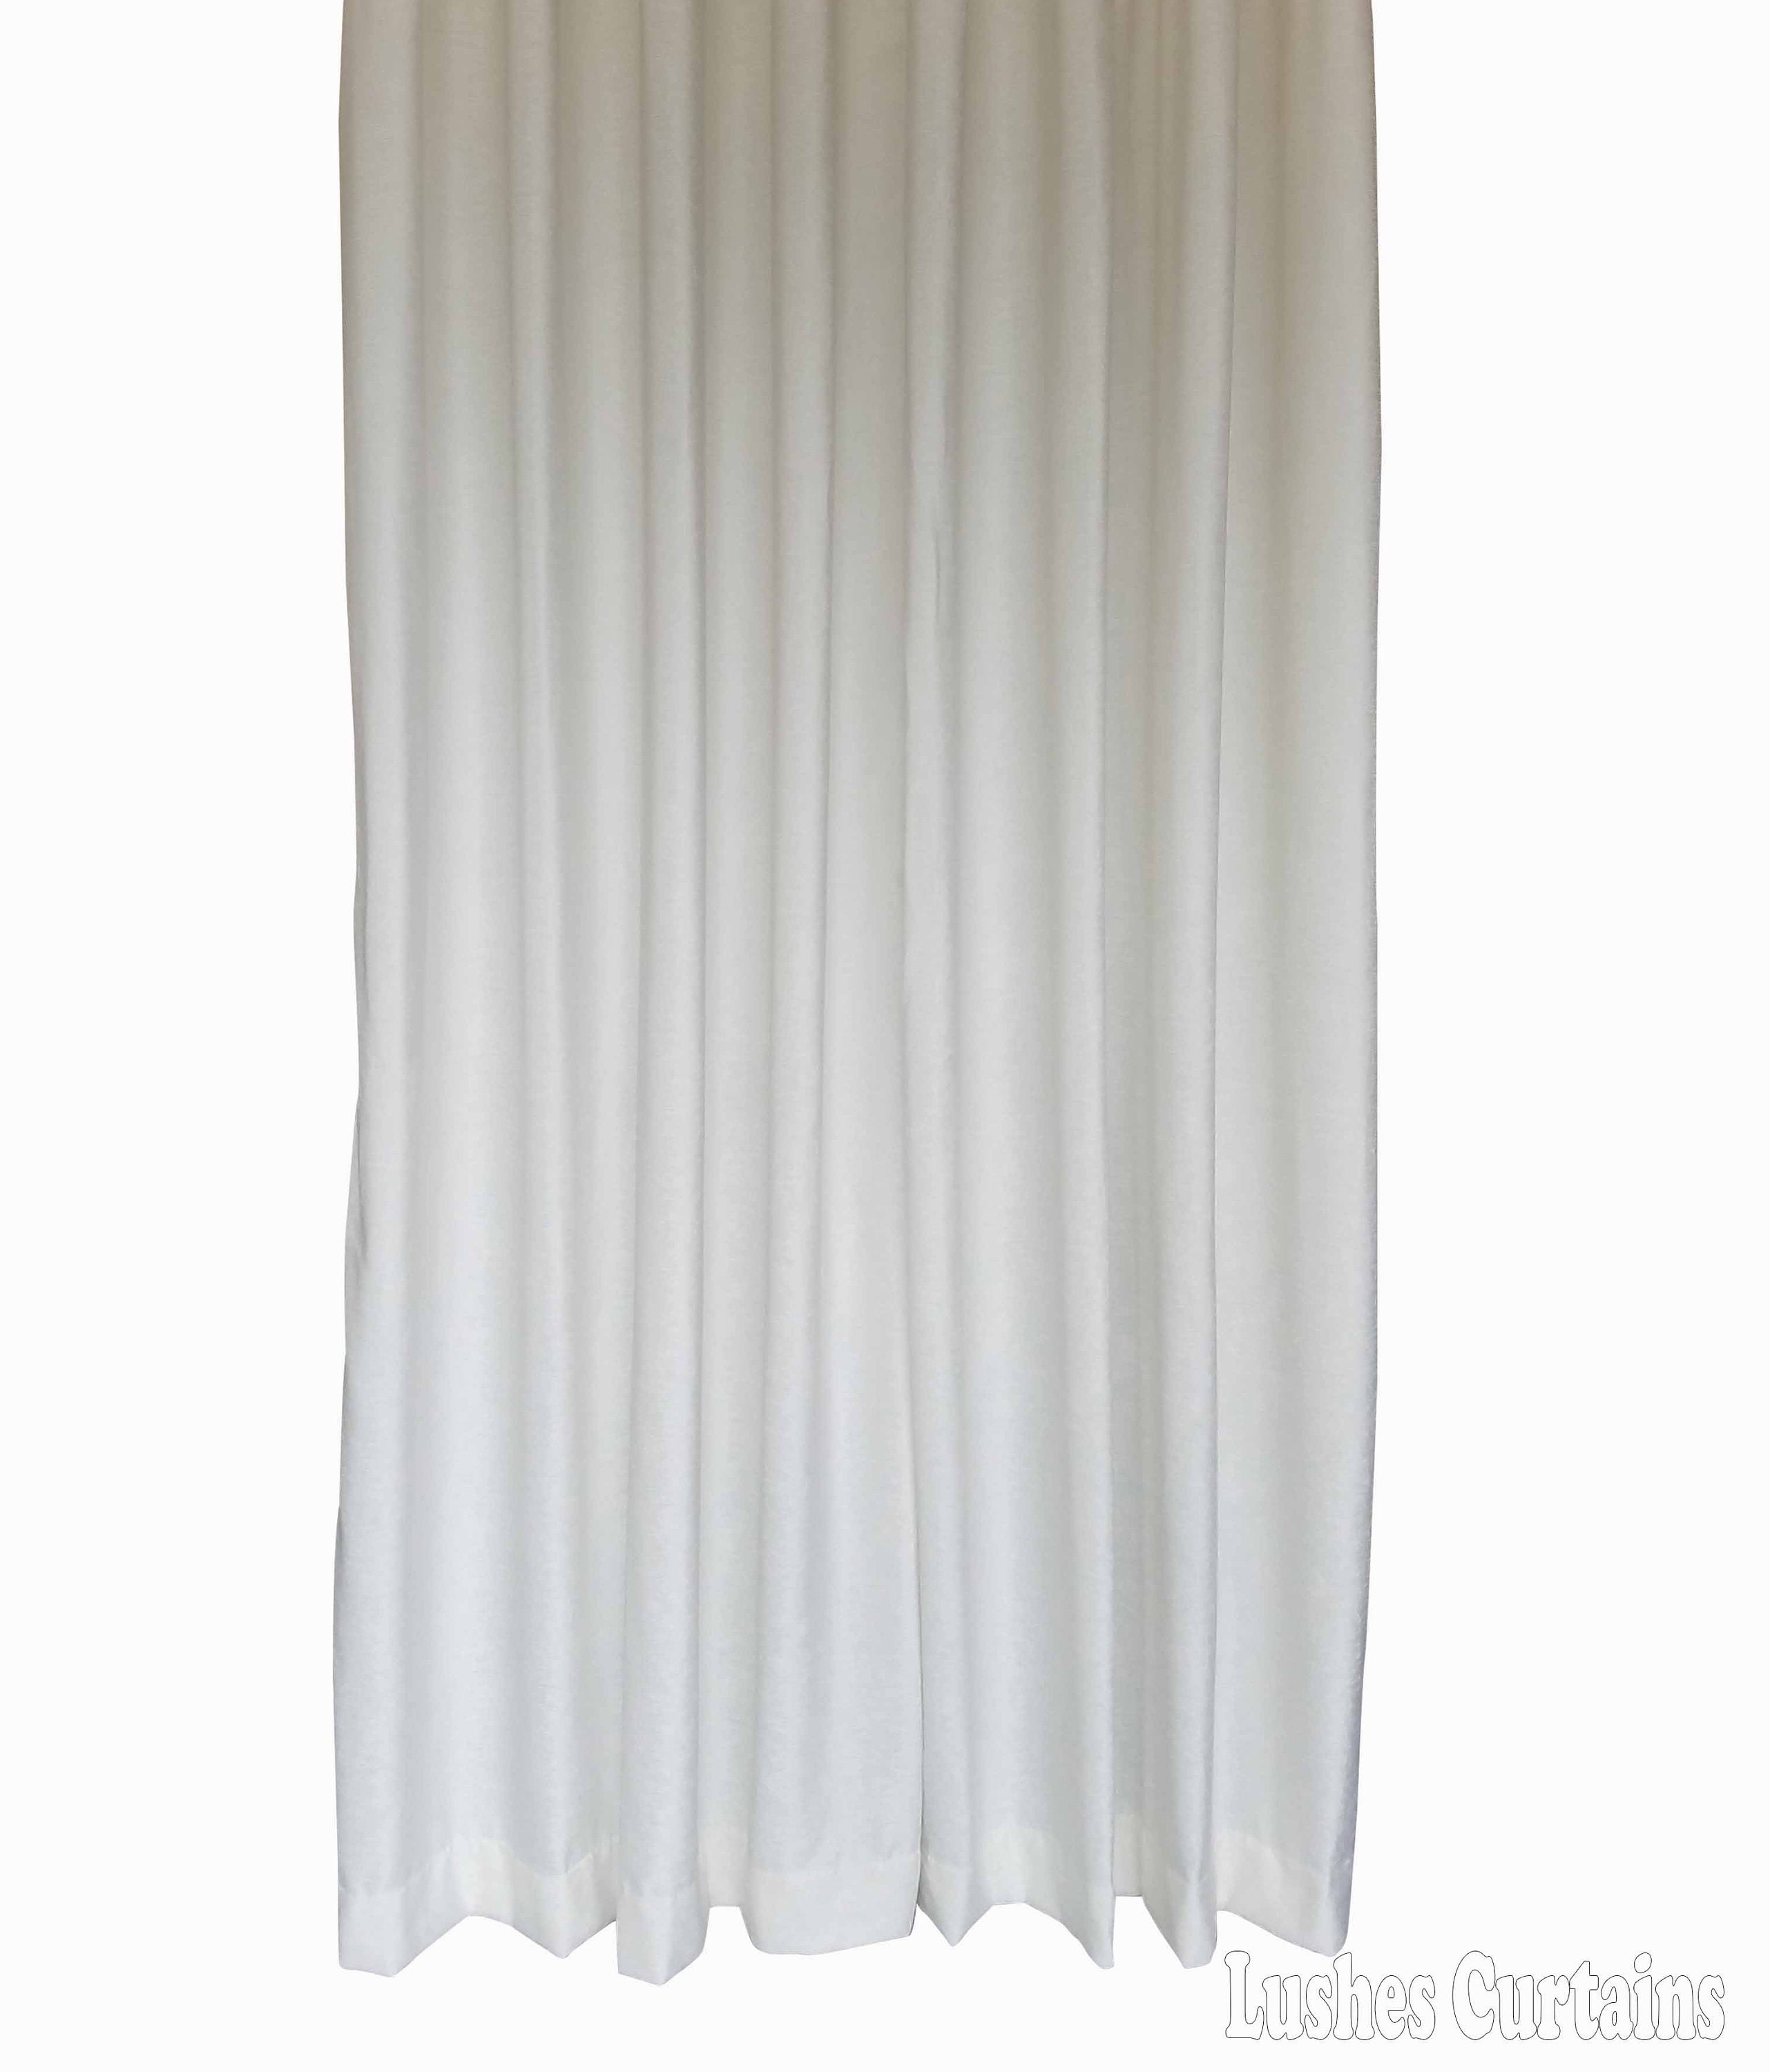 Black 96 Inch Long Fire/Flame Retardant Velvet Curtain Panel w/Rod Pocket Drape 